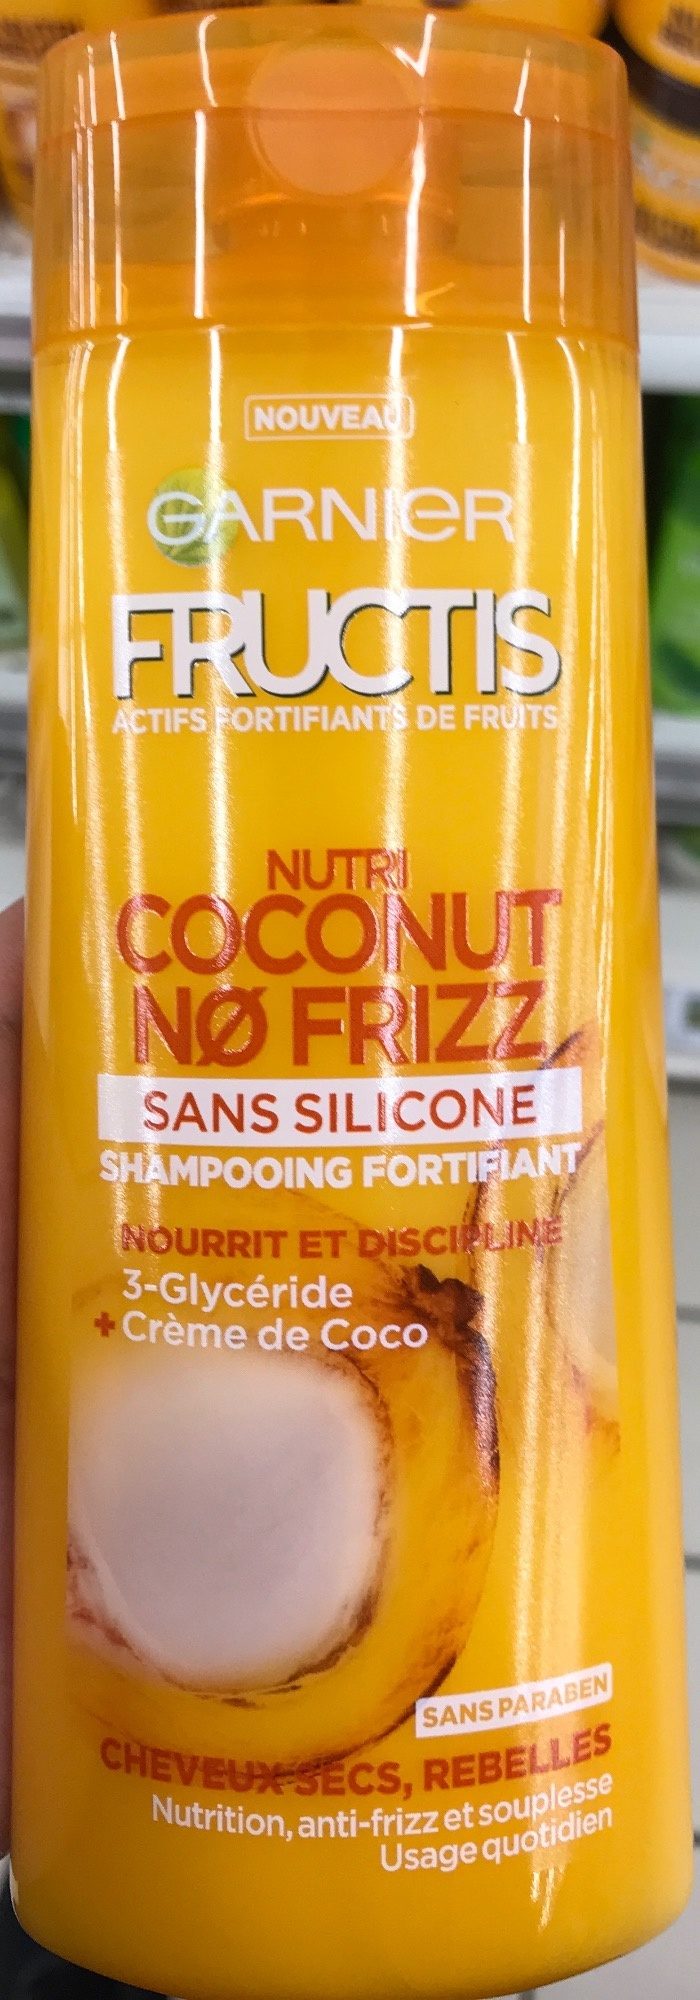 Fructis Nutri Coconut No Frizz - Product - fr